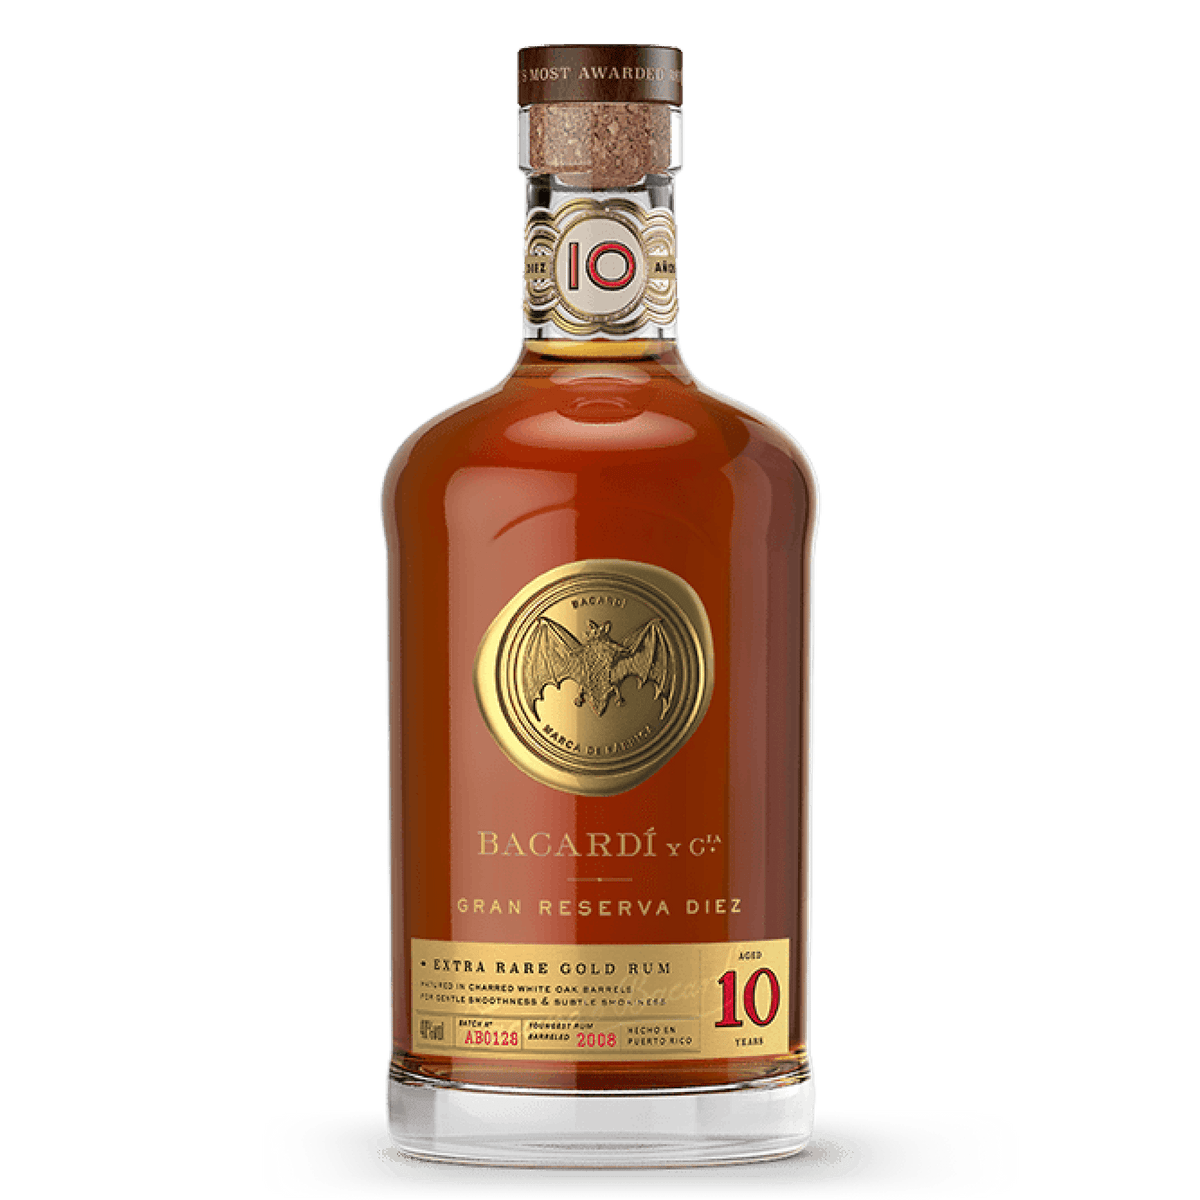 Bacardi Gran Reserva Diez 10 Year Rum - Barbank